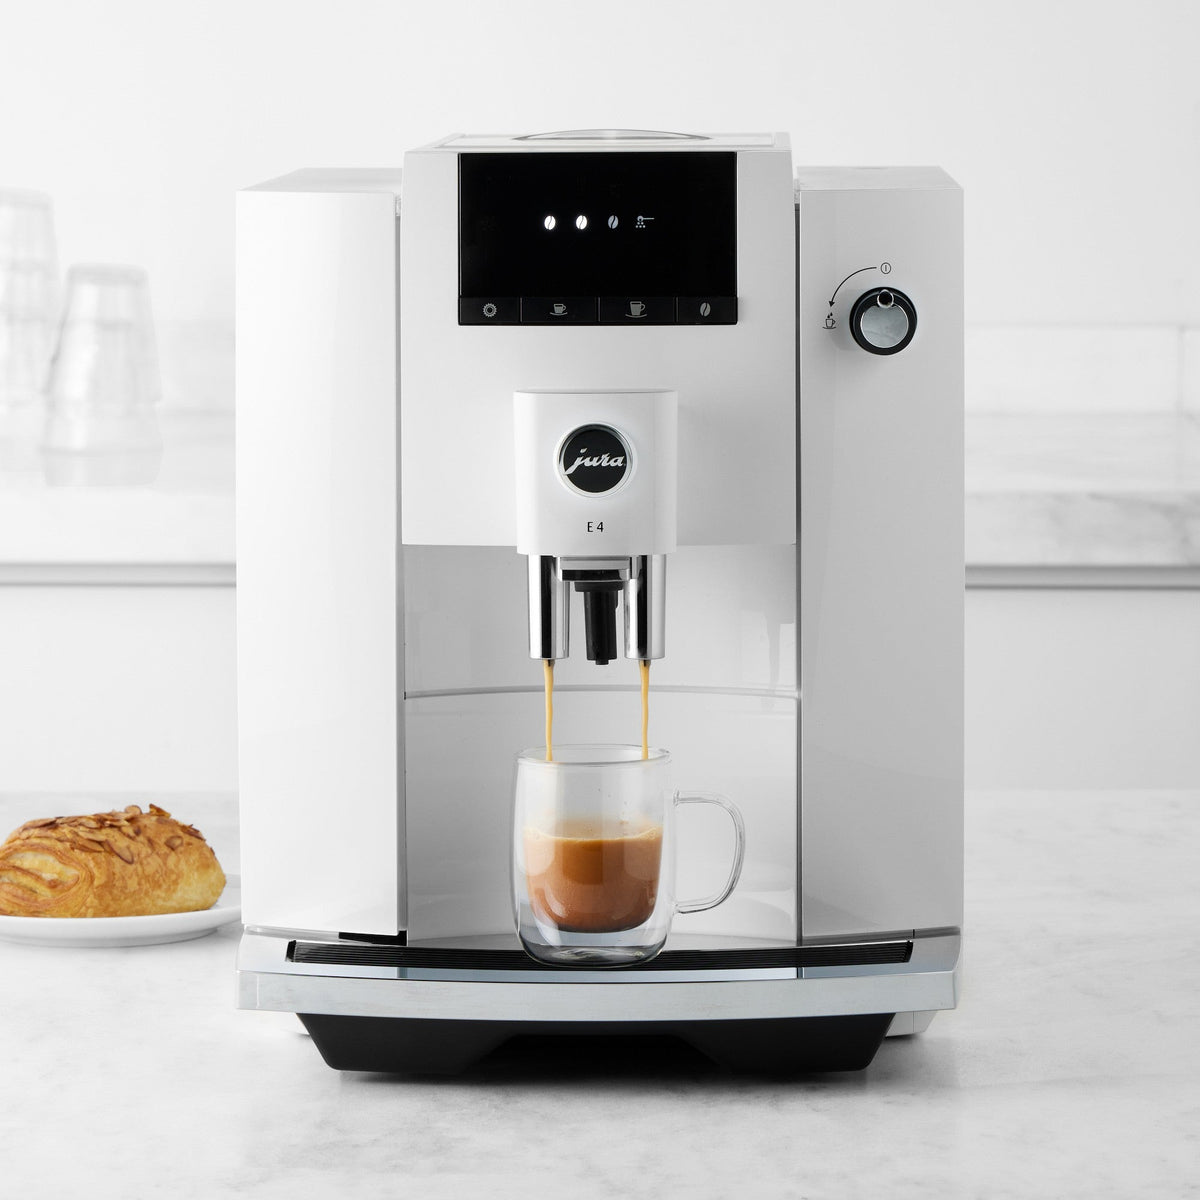 Machine Automatic – Tarzianwestforhousewares Espresso Fully JURA E4